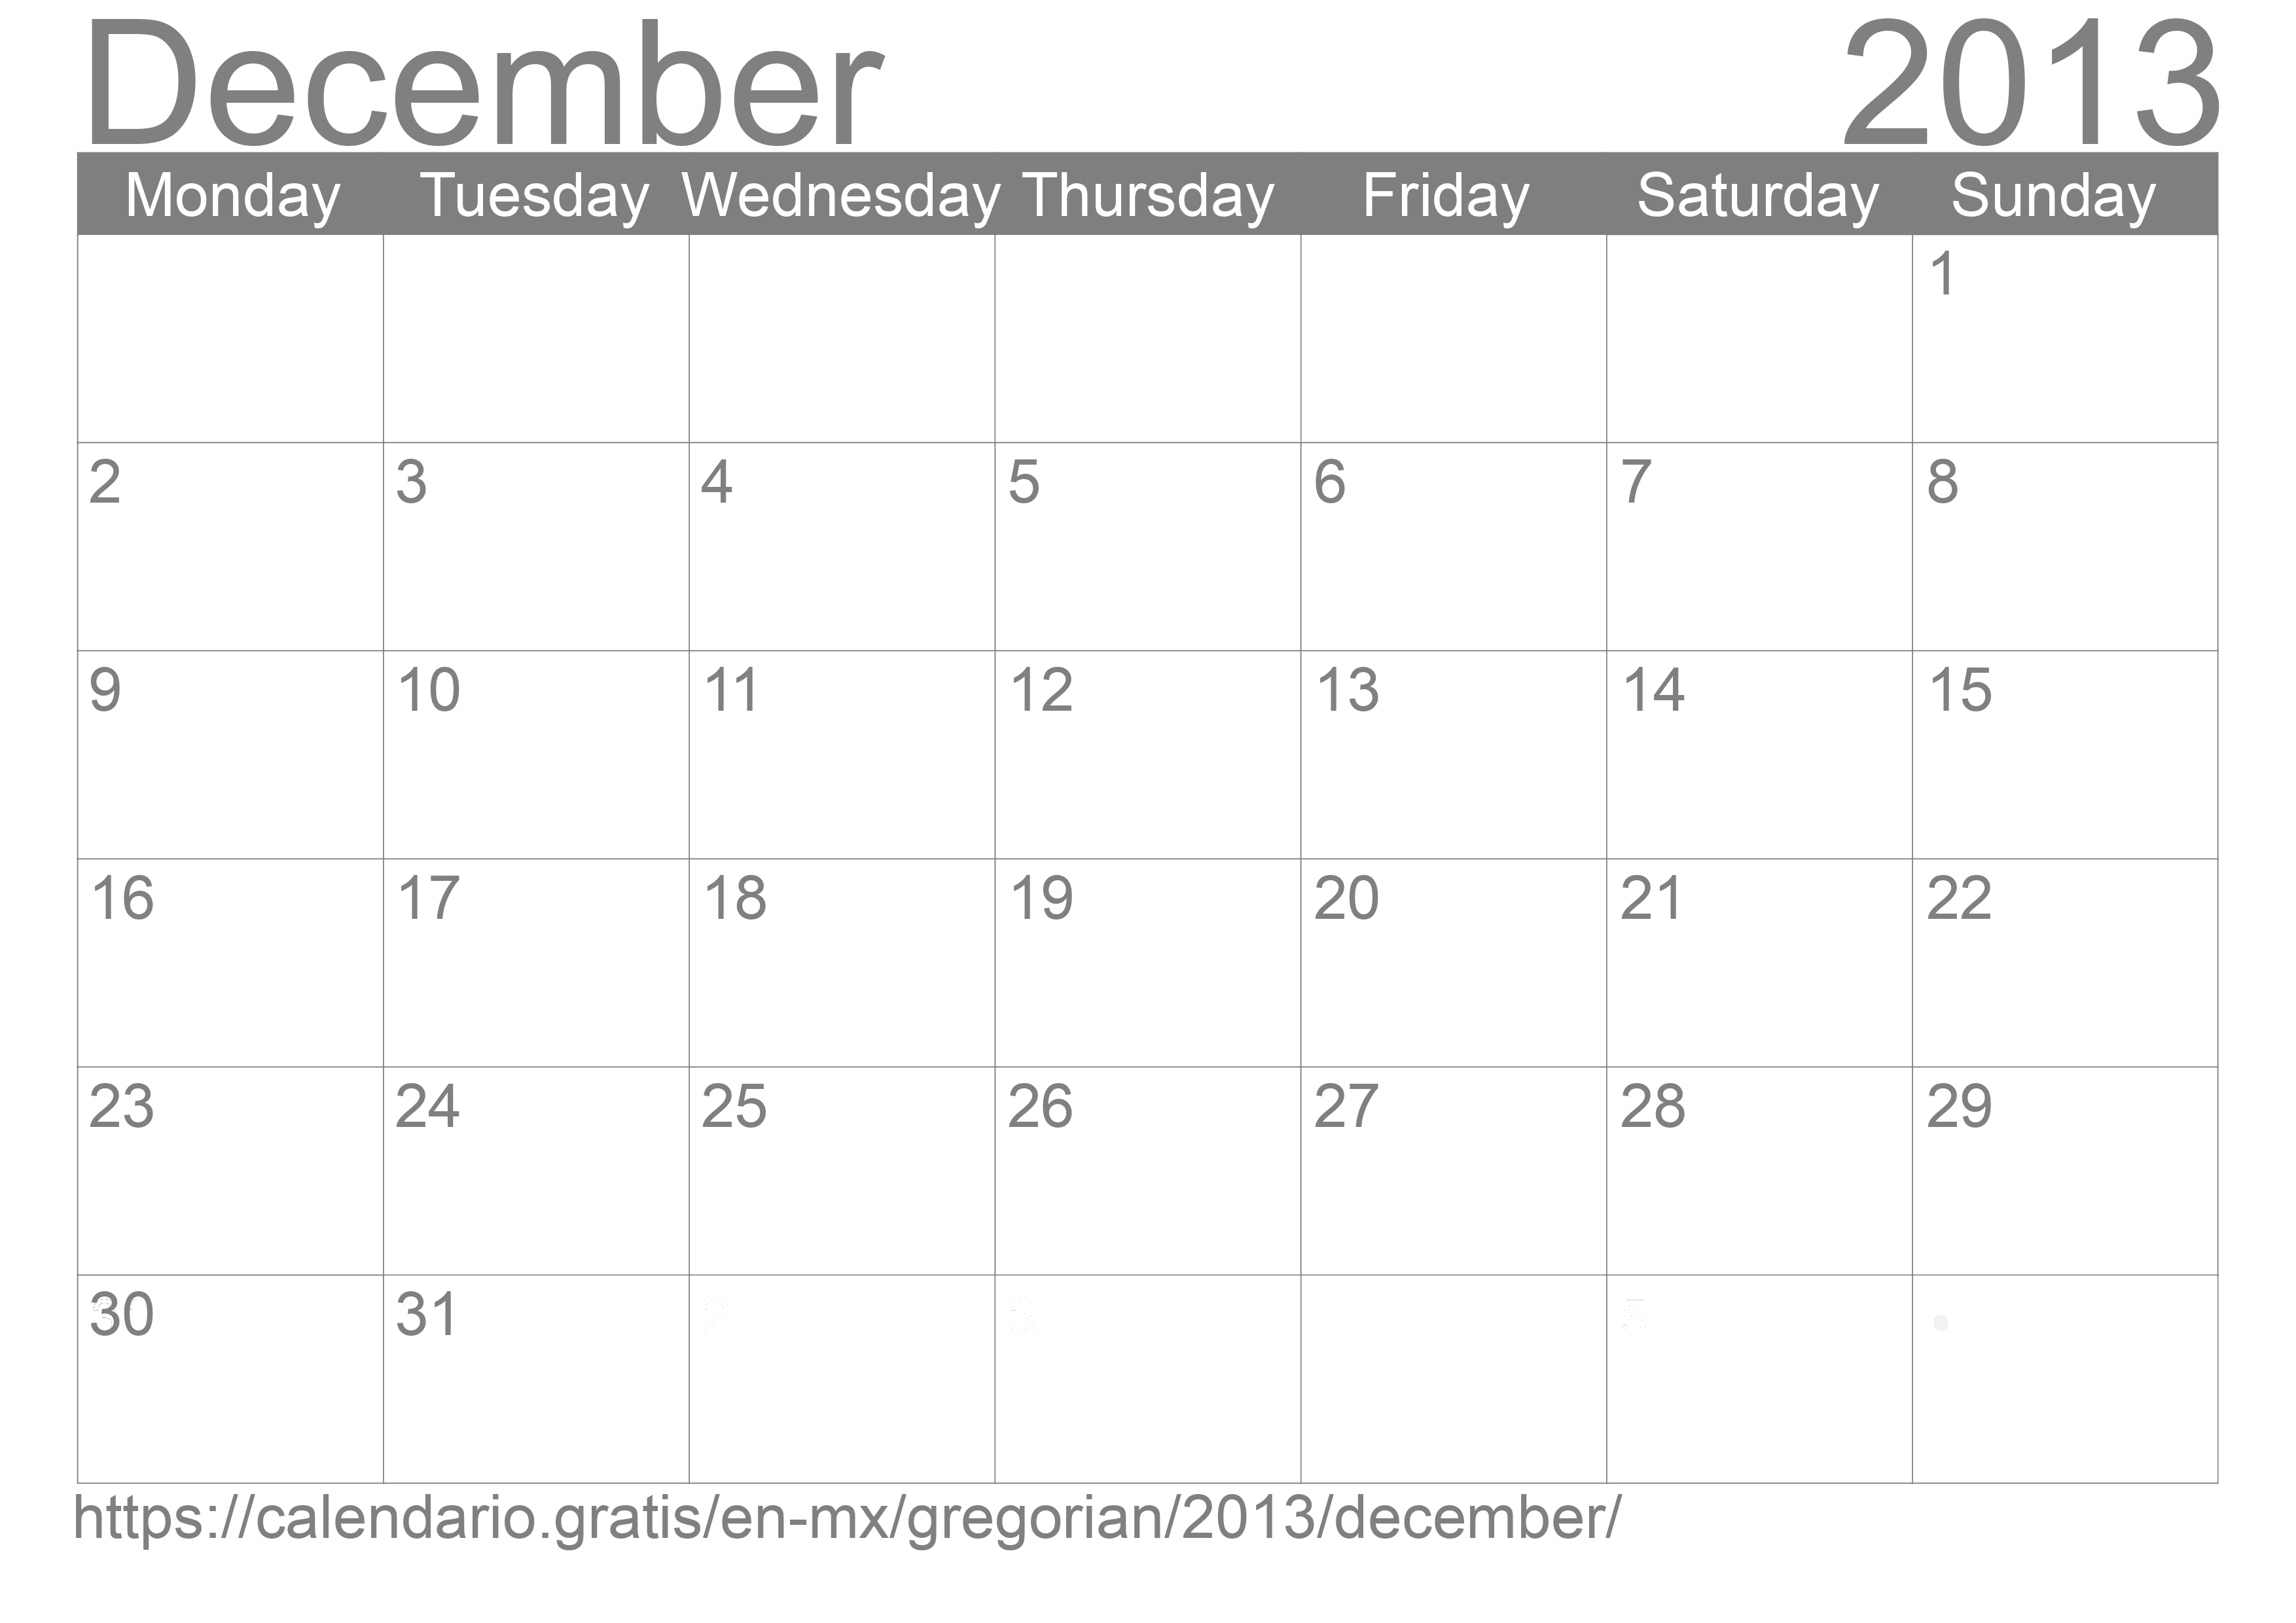 Calendar December 2013 to print